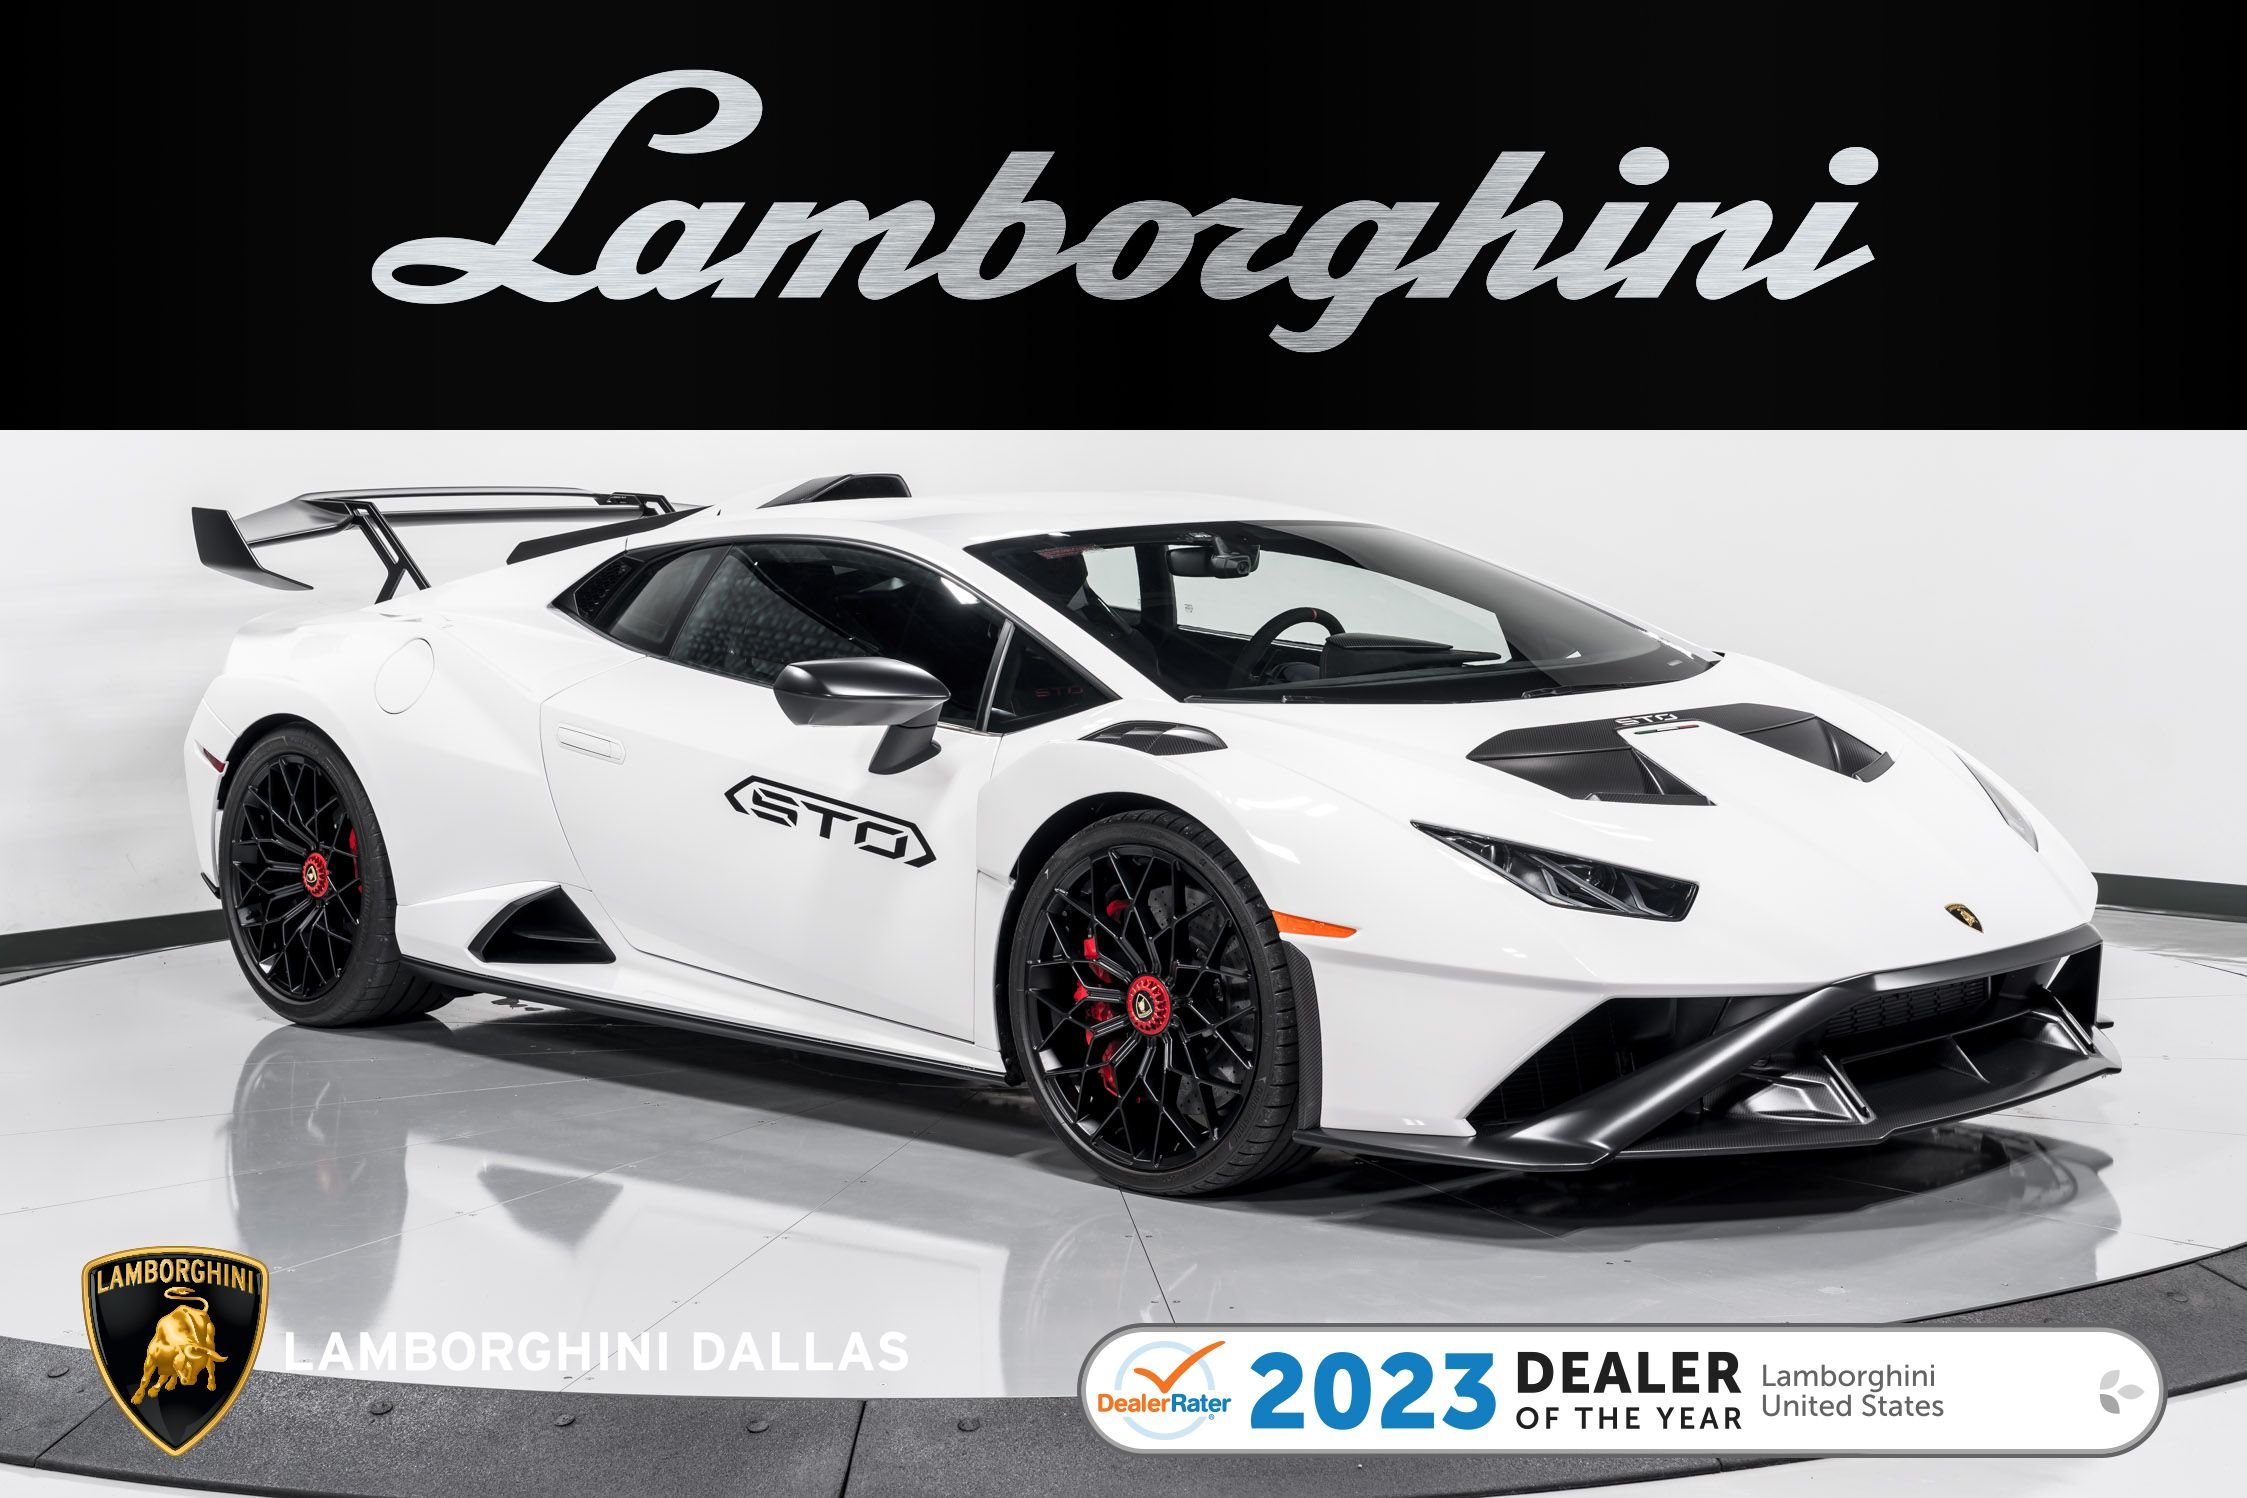 Used 2021 Lamborghini Huracan STO For Sale Richardson,TX | Stock 